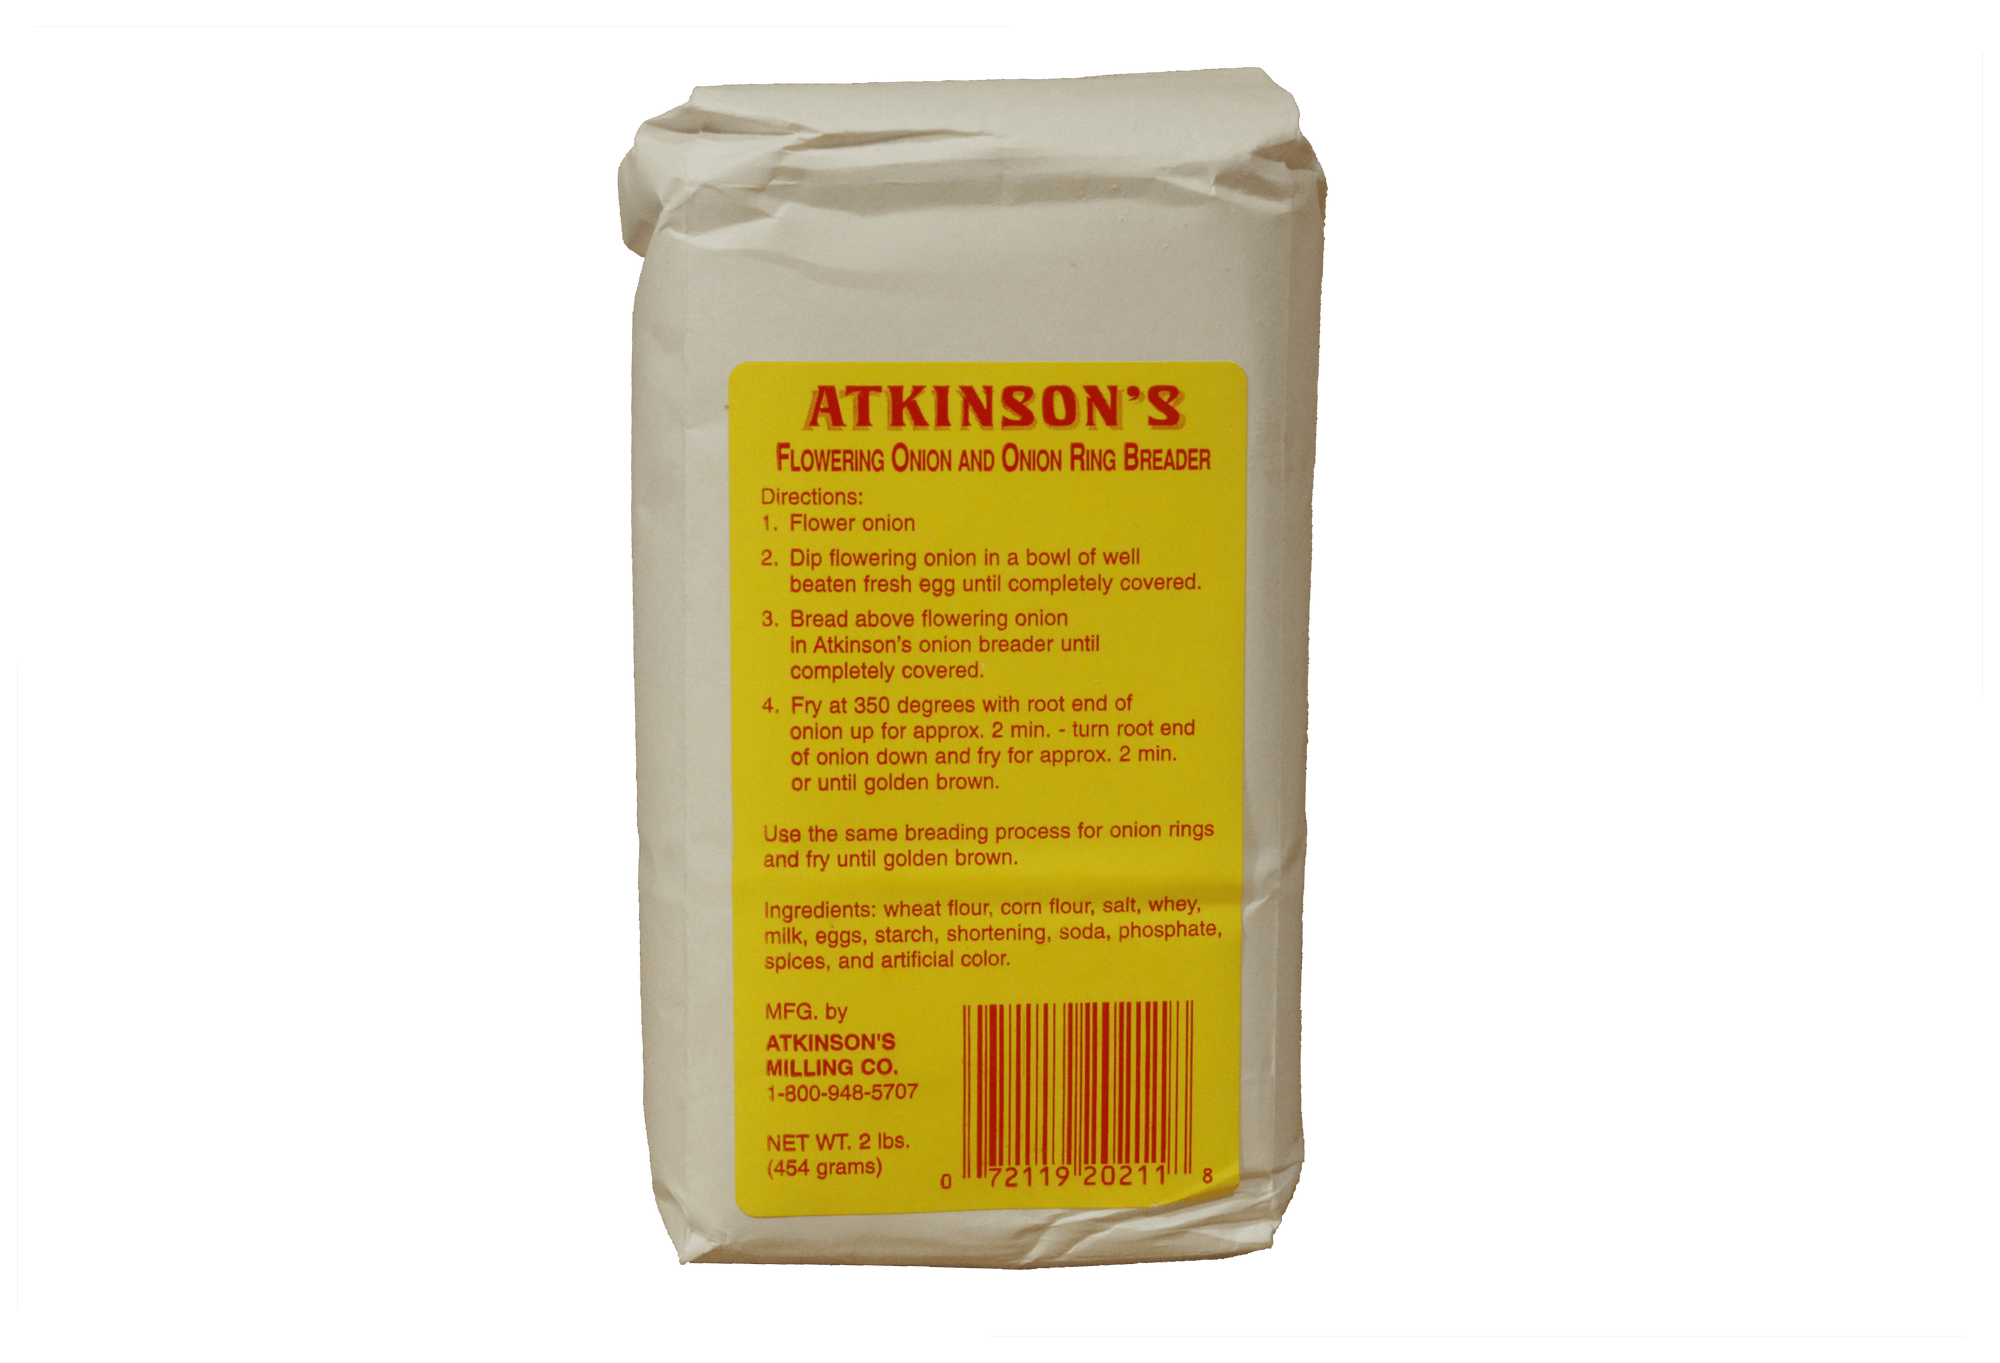 Atkinson's Atkinson's Flowering Onion Breader 2 lb